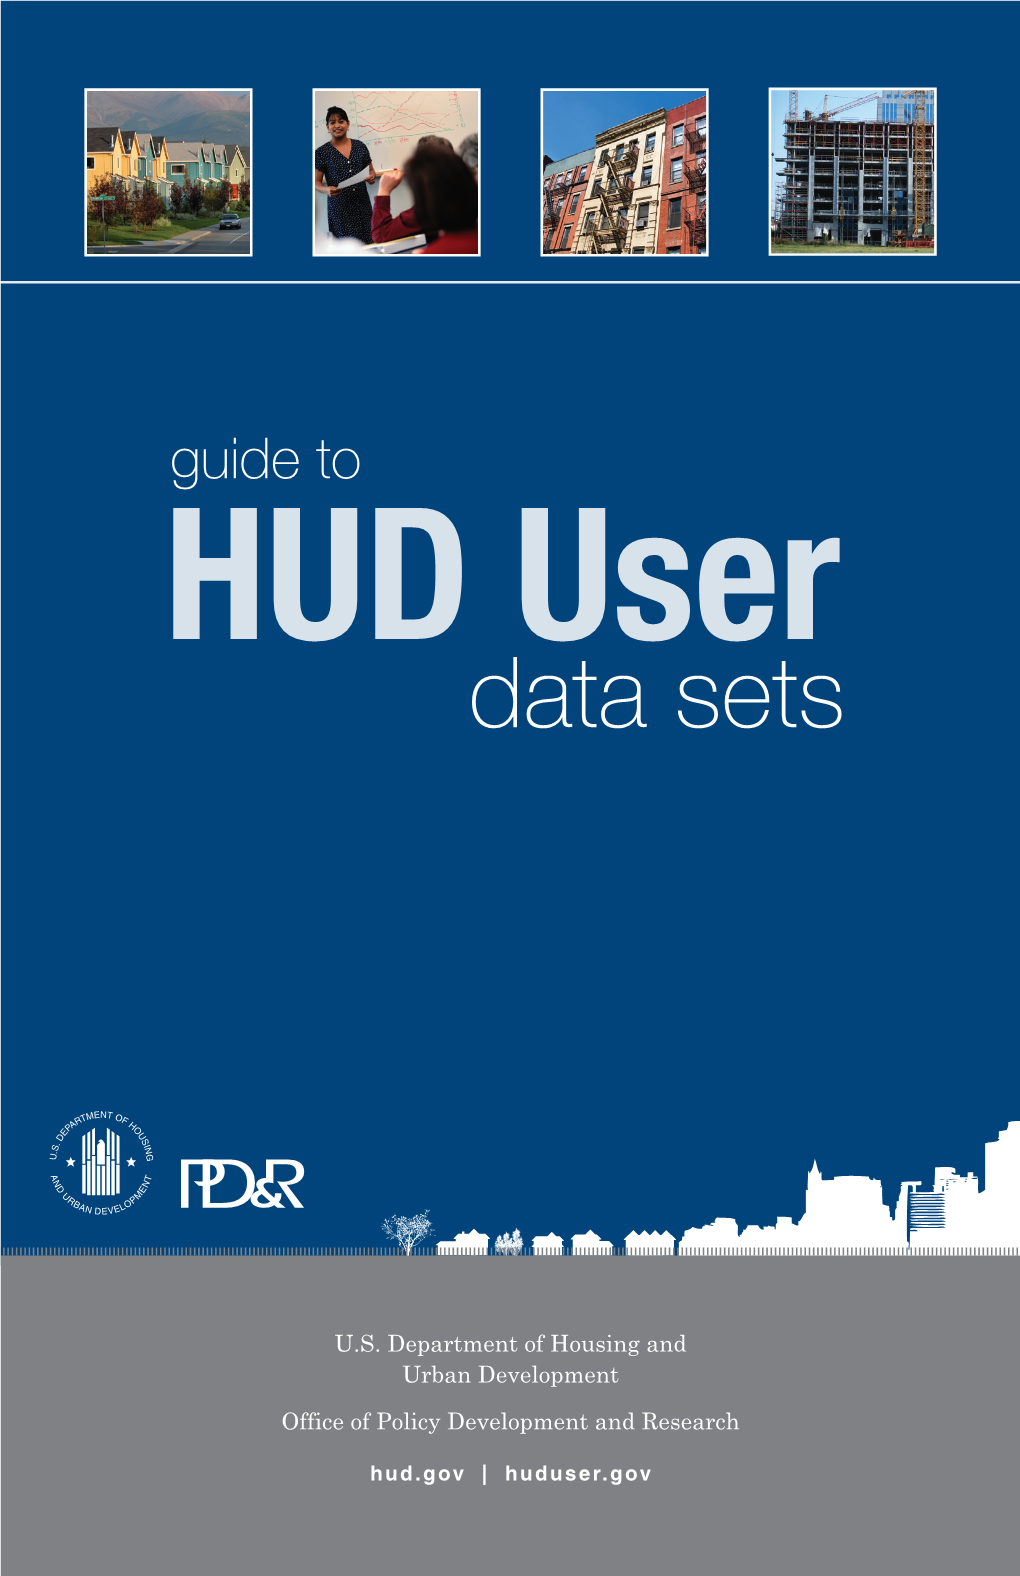 Guide to HUD User Data Sets